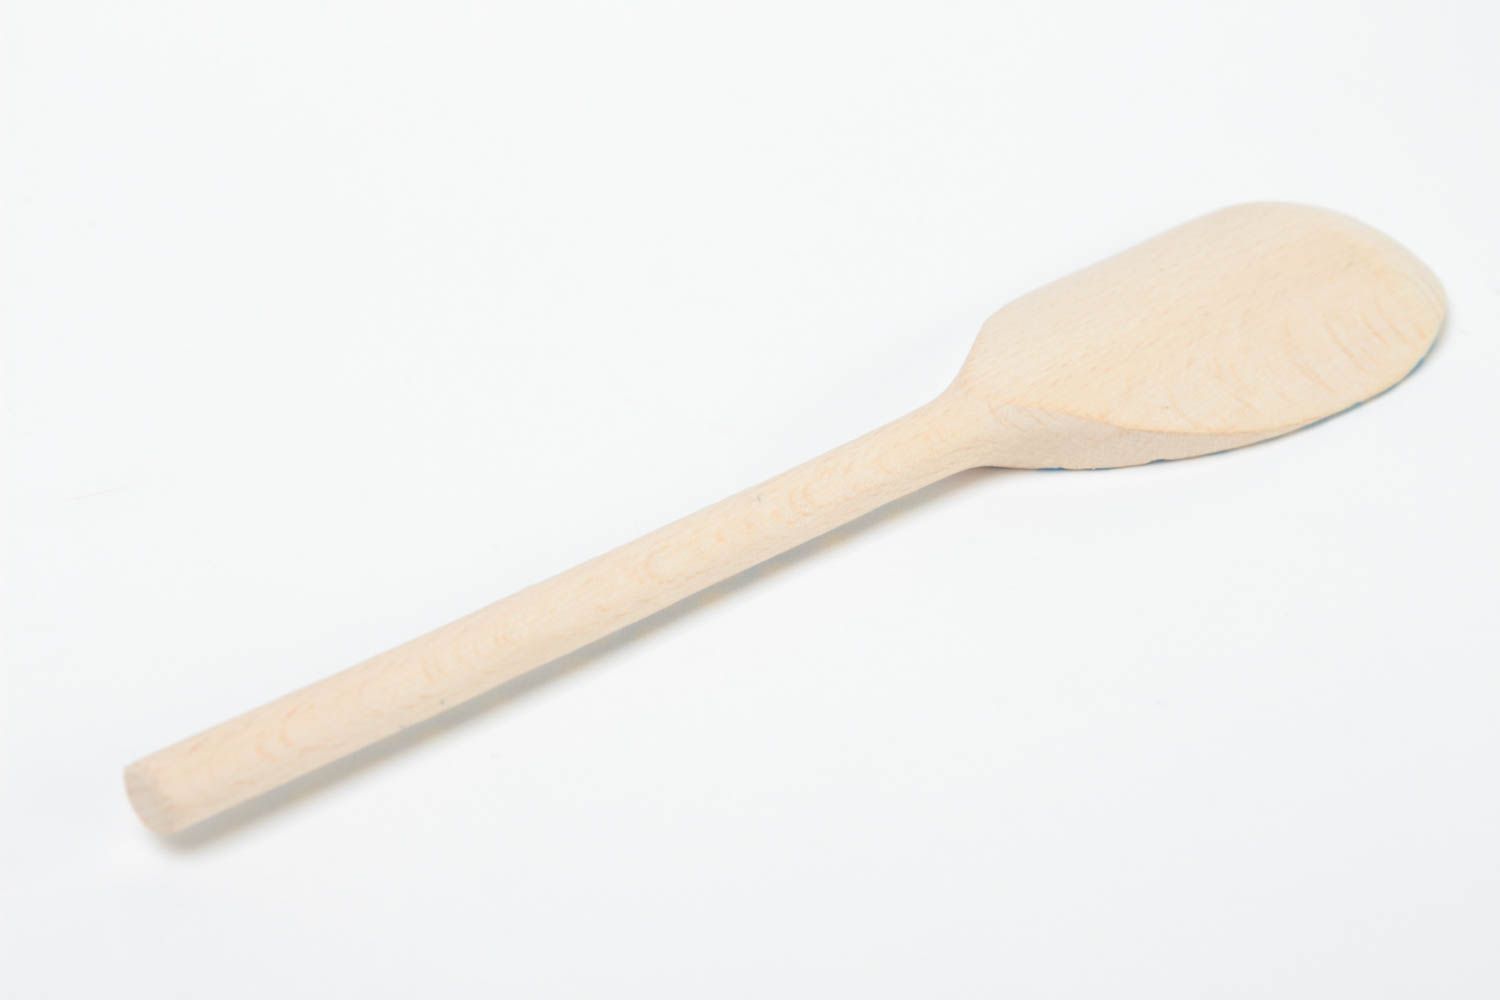 Ethnic spoon decoration ideas wooden cutlery unusual gift kitchen accessories photo 4